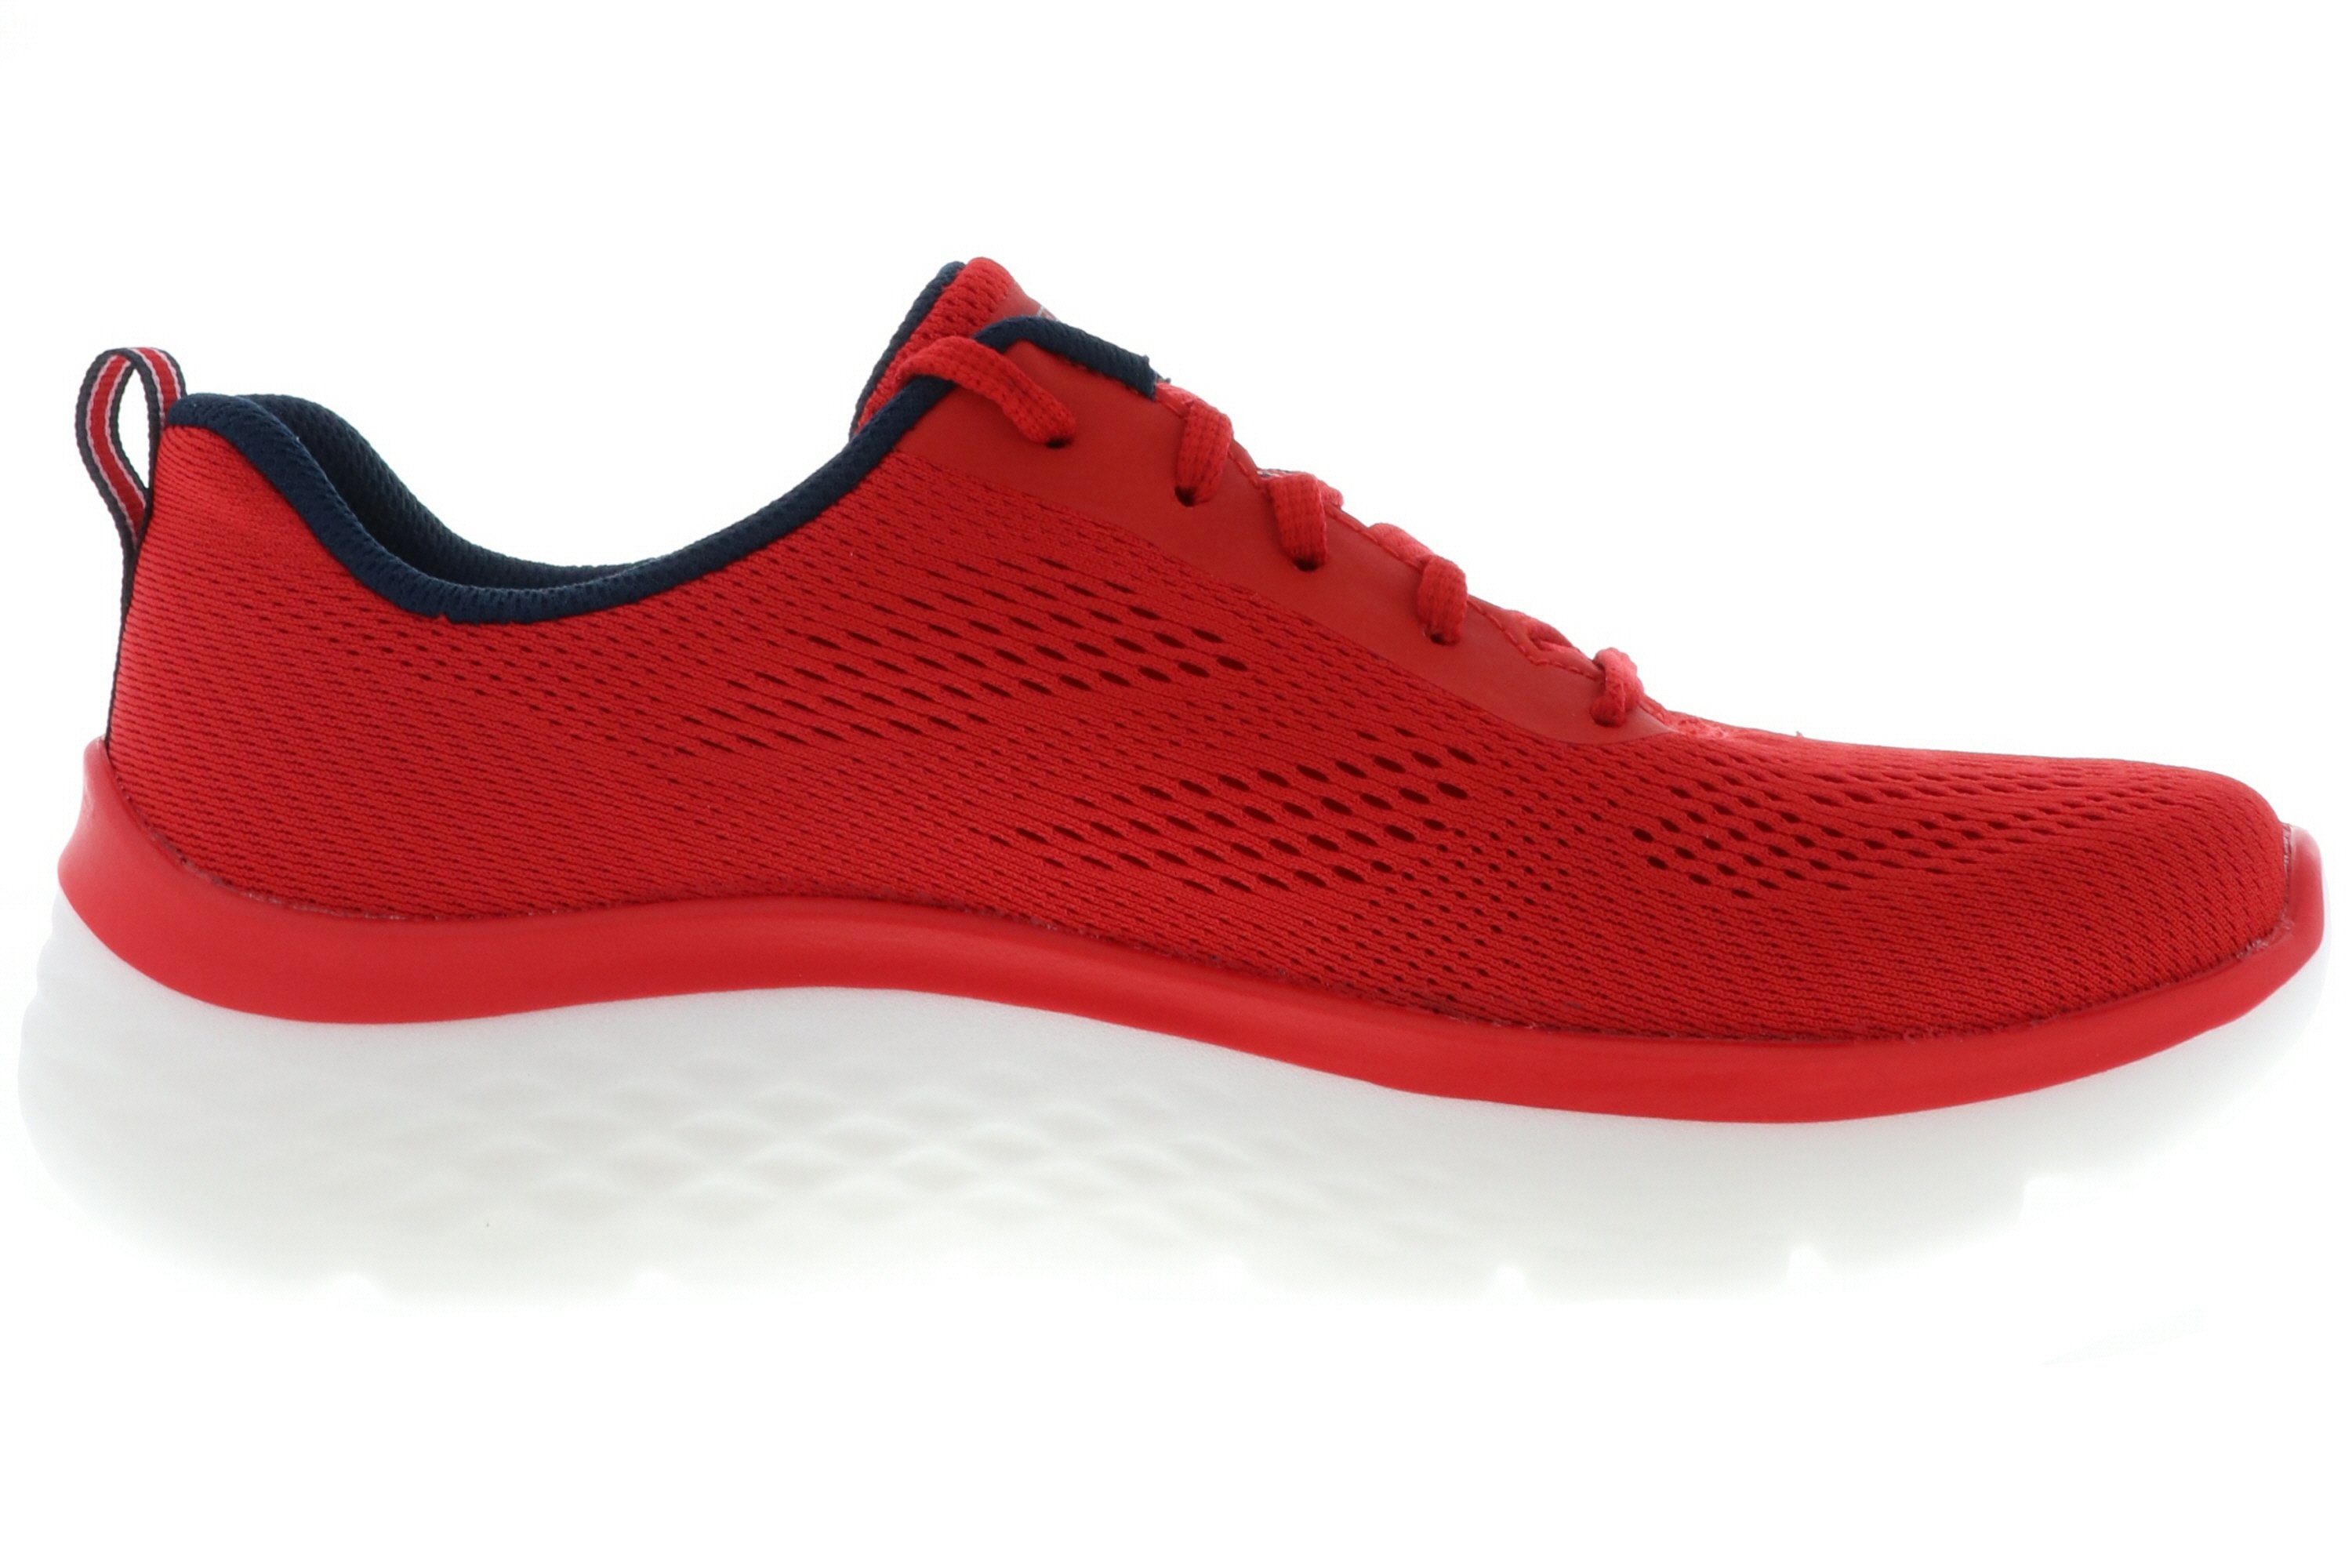 Go Hyper (20203088) red/navy Skechers 124578/RDNV Walk Sneaker Insight Red/Navy Burst-Space